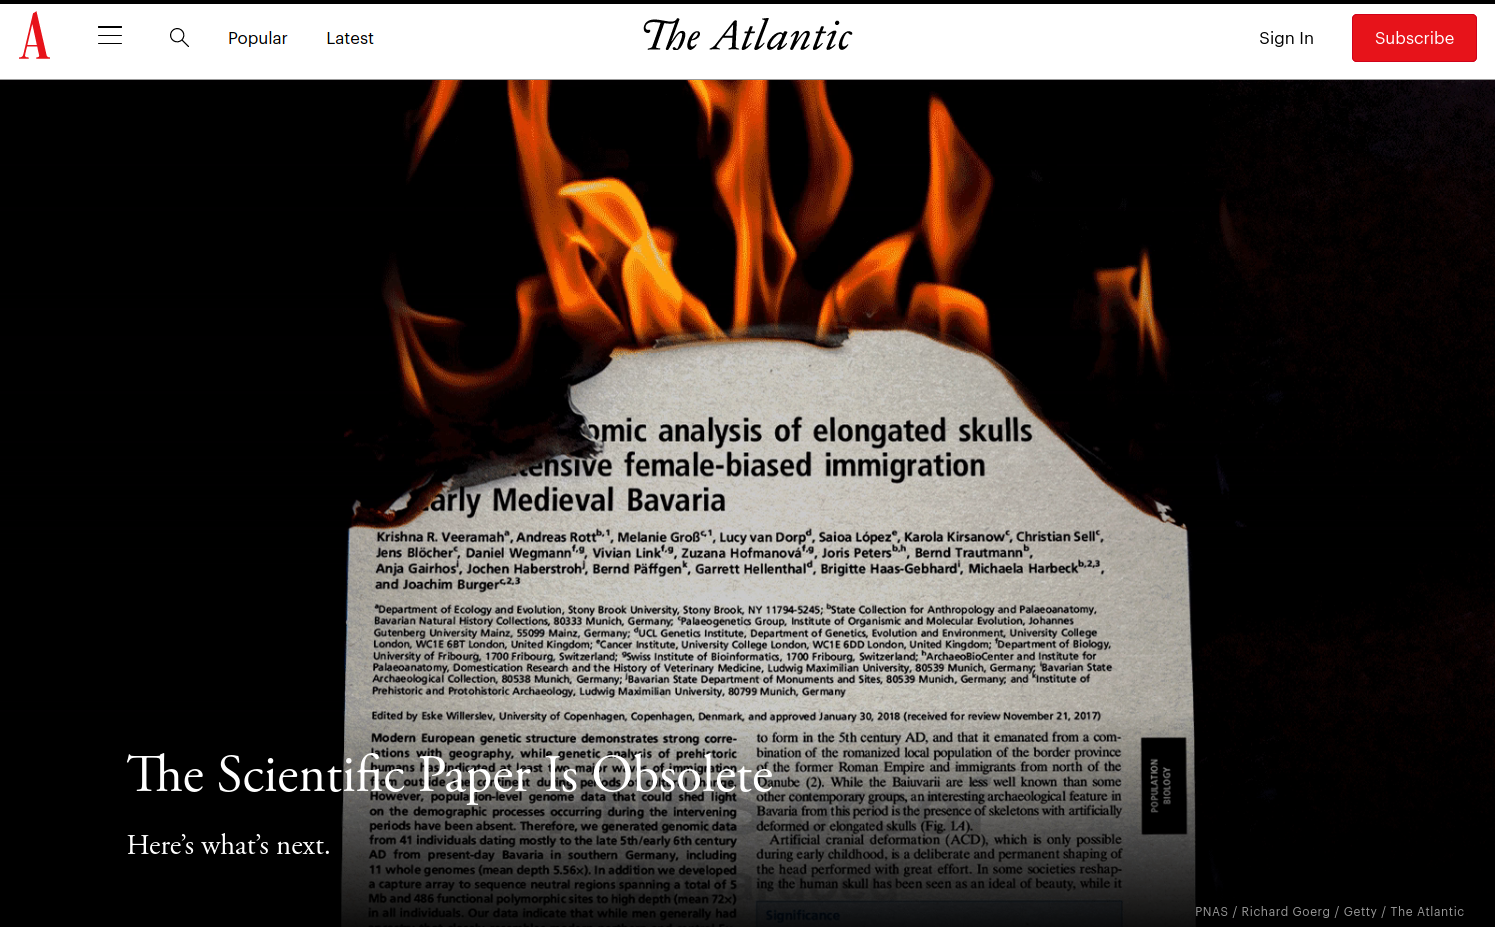 The Atlantic - The Scientific Paper is Obsolete